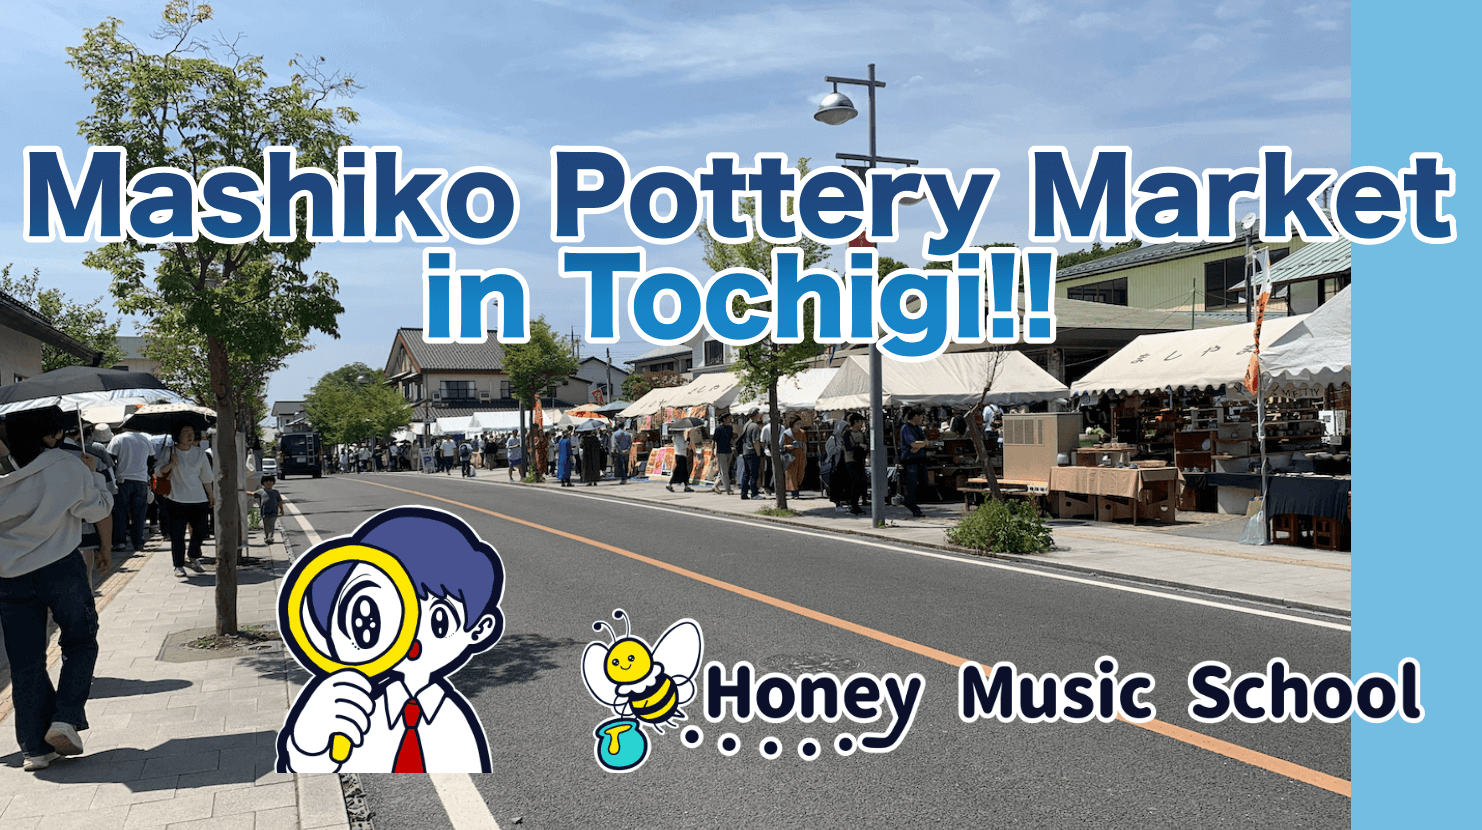 Mashiko Pottery Market